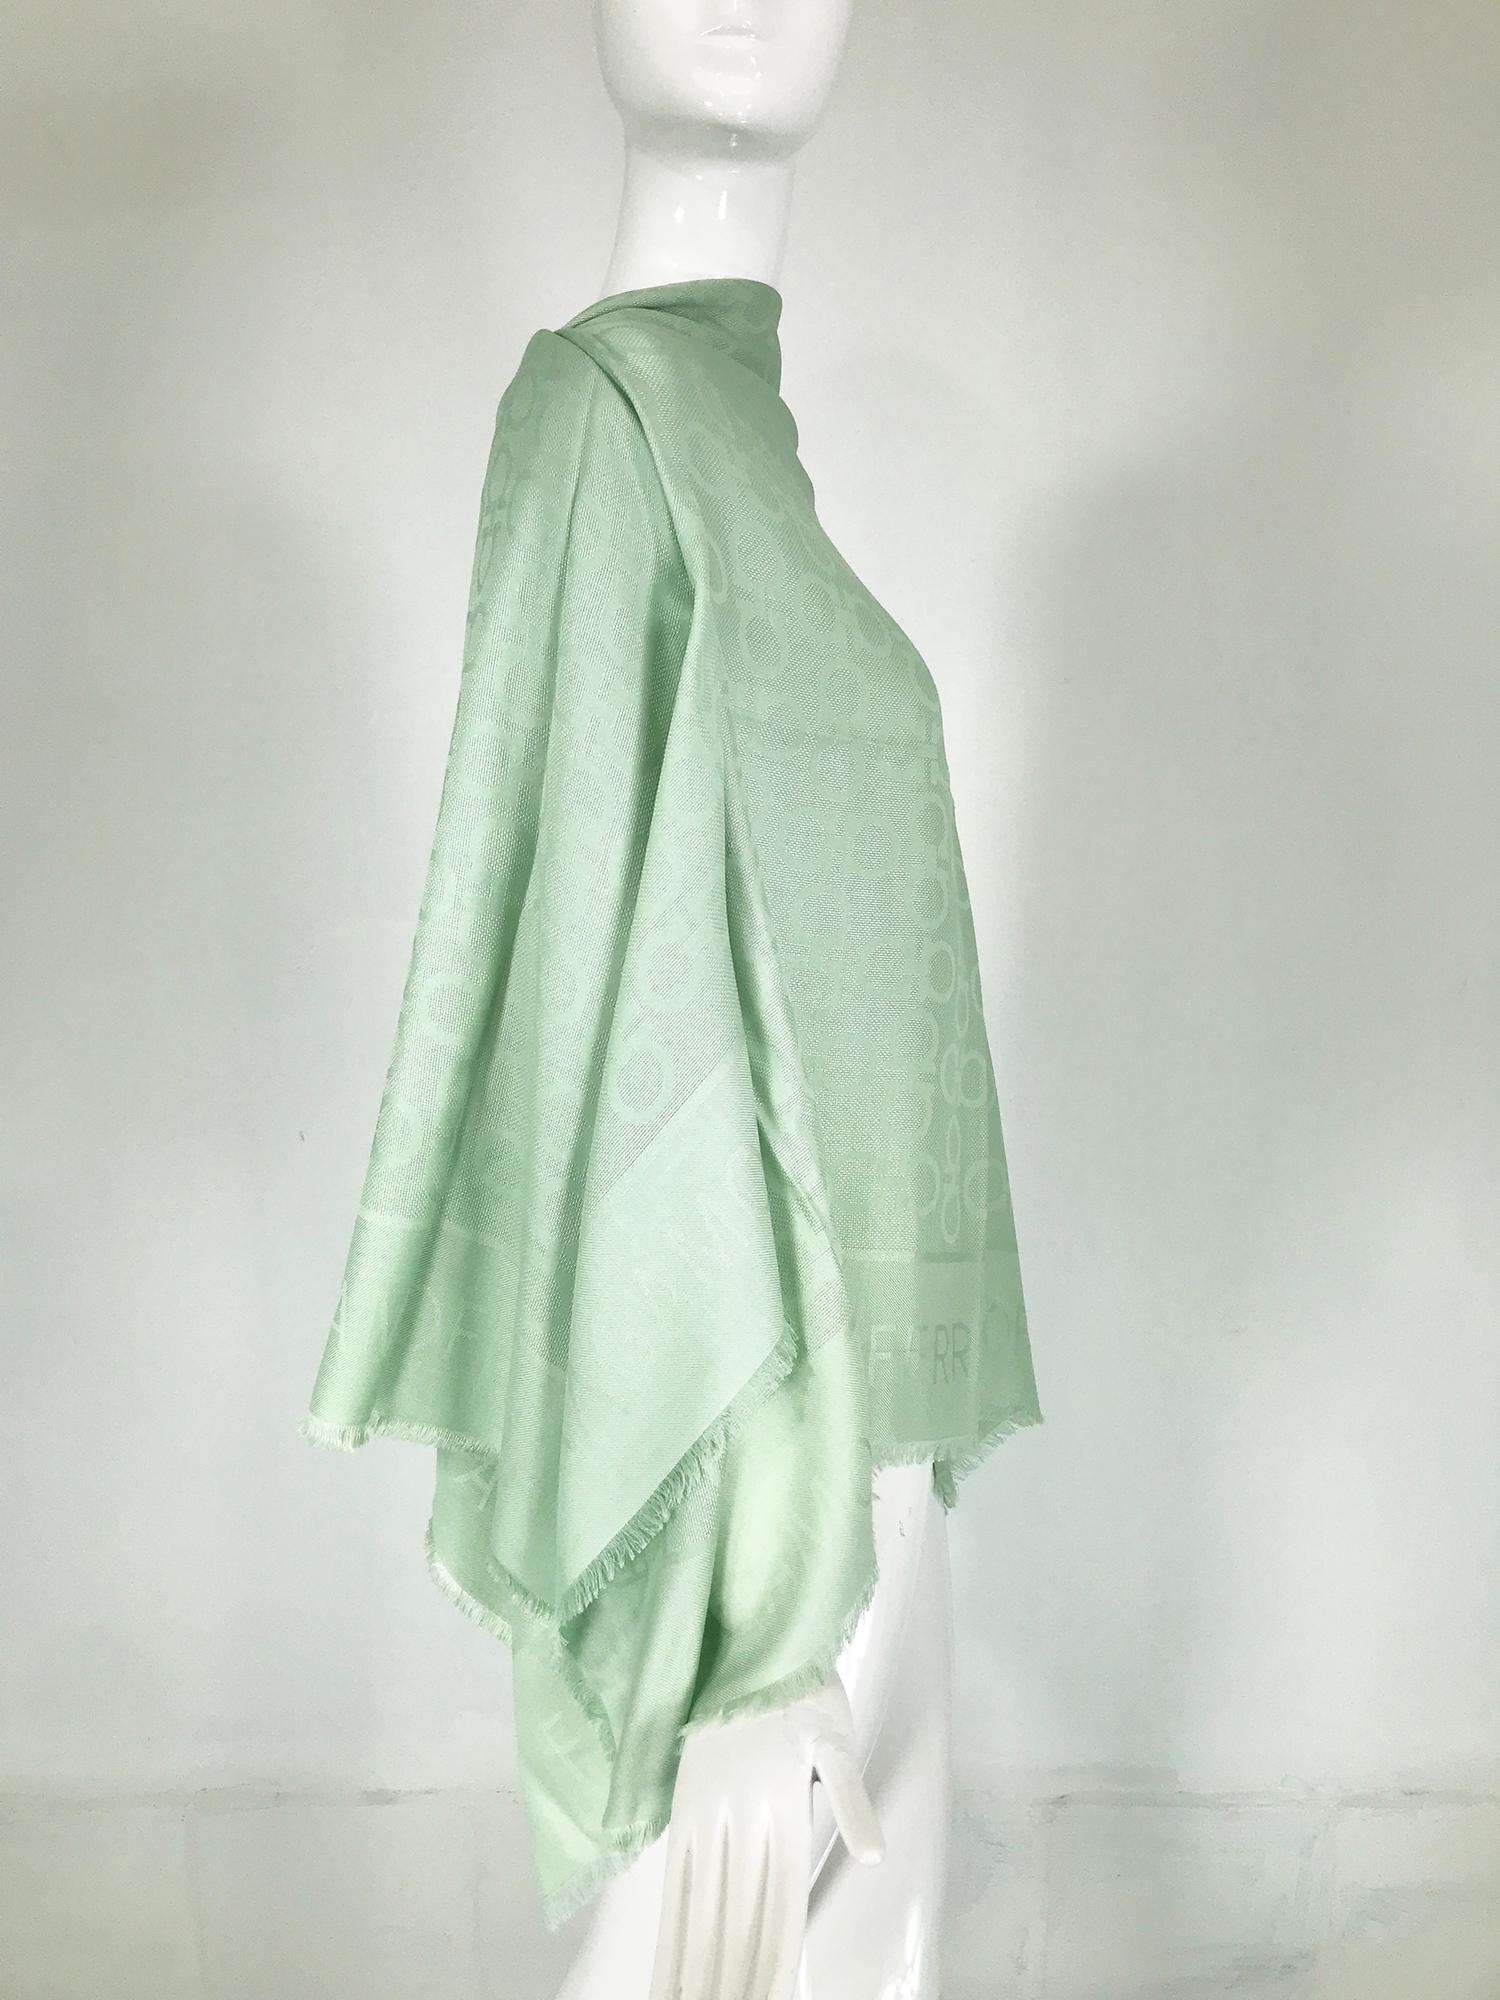 Salvatore Ferragamo Mint Green Silk & Wool Jacquard Shawl With Self Fringe For Sale 1